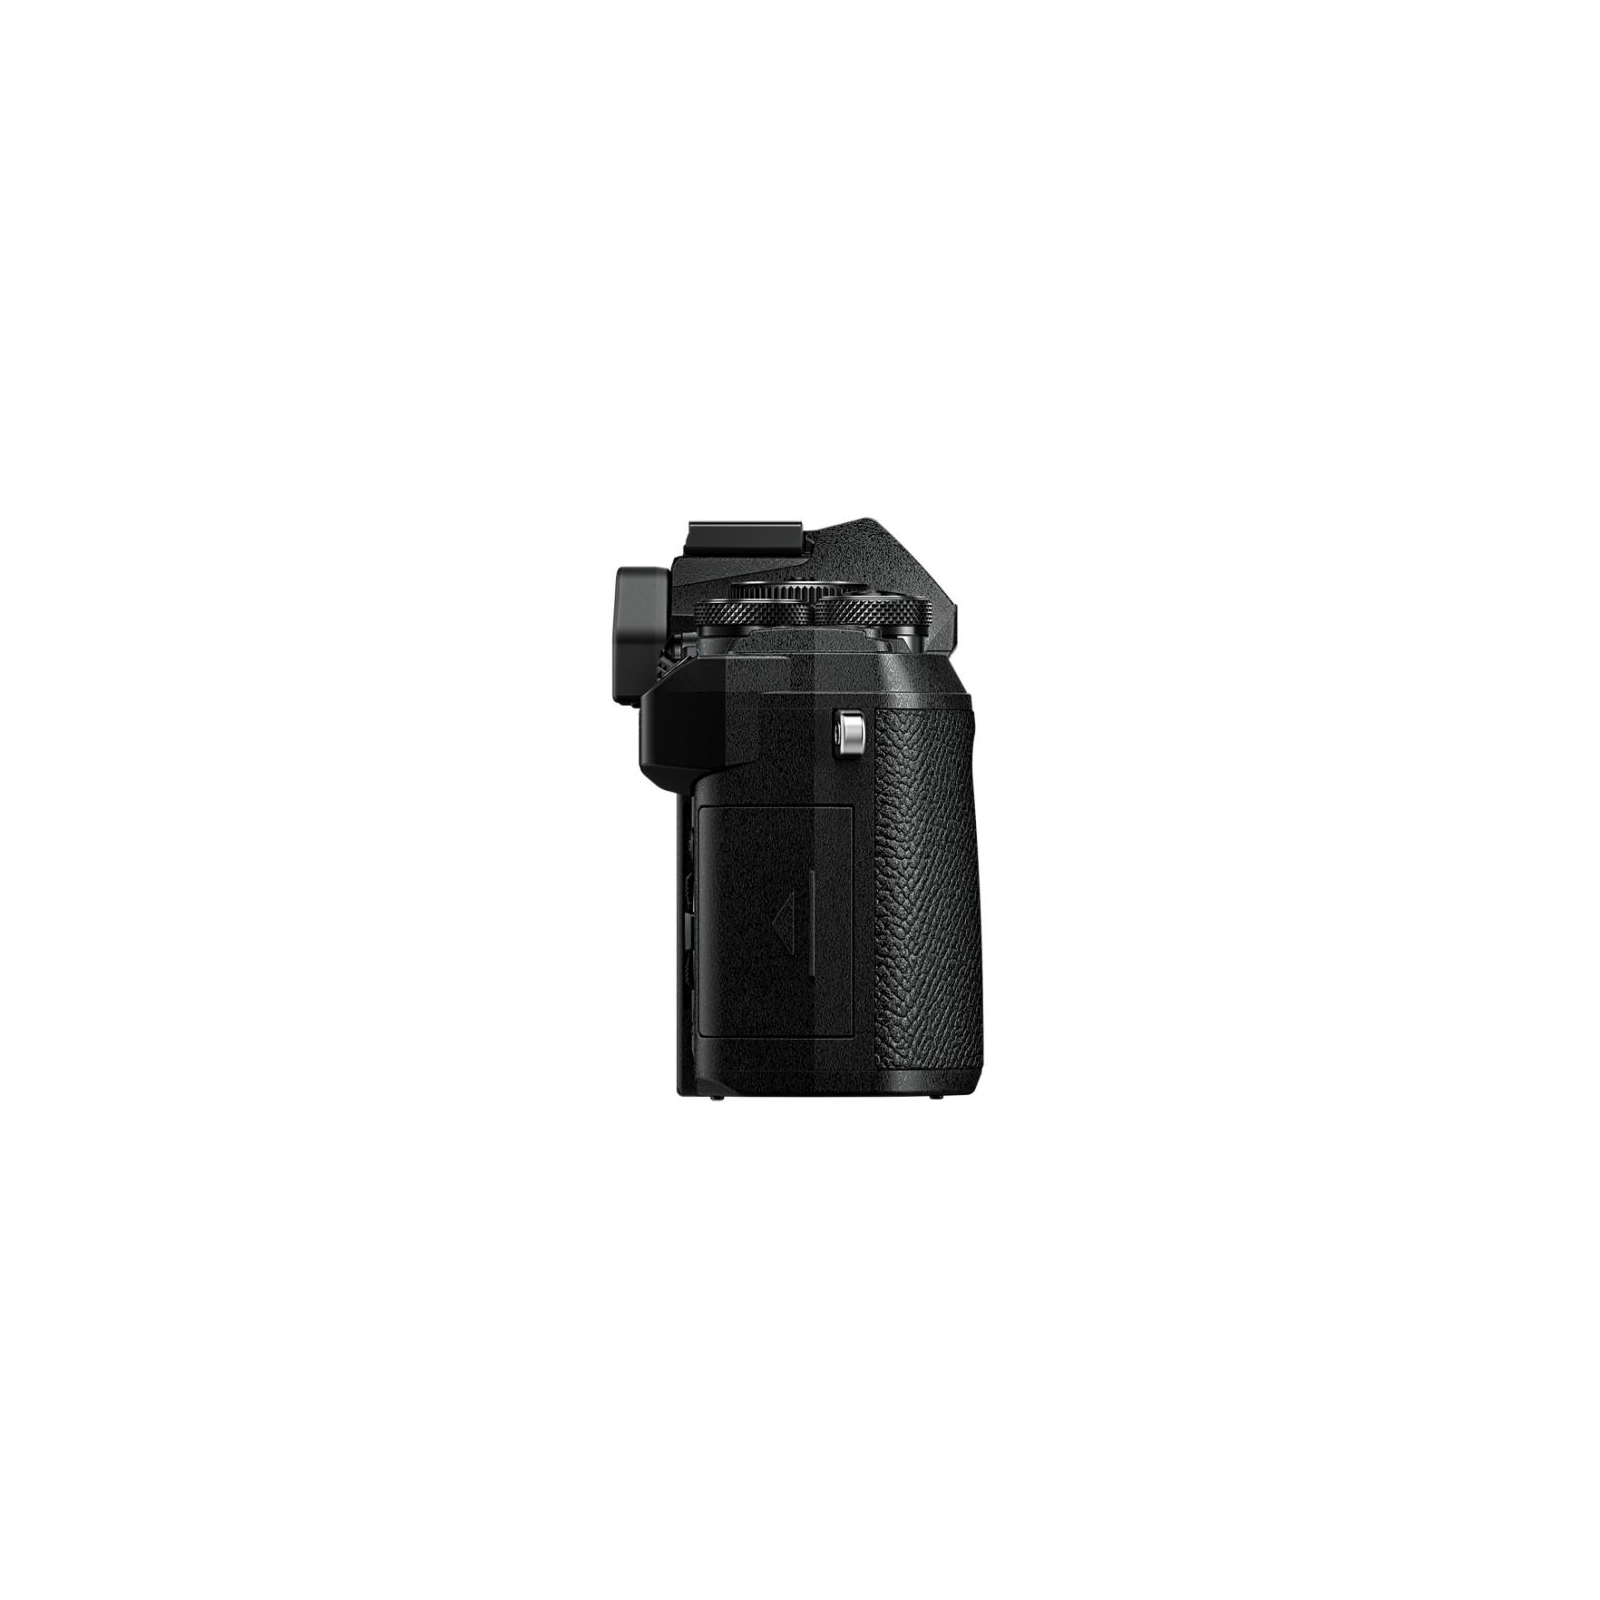 Цифровой фотоаппарат Olympus E-M5 mark III 12-200 Kit black/black (V207090BE010) изображение 3